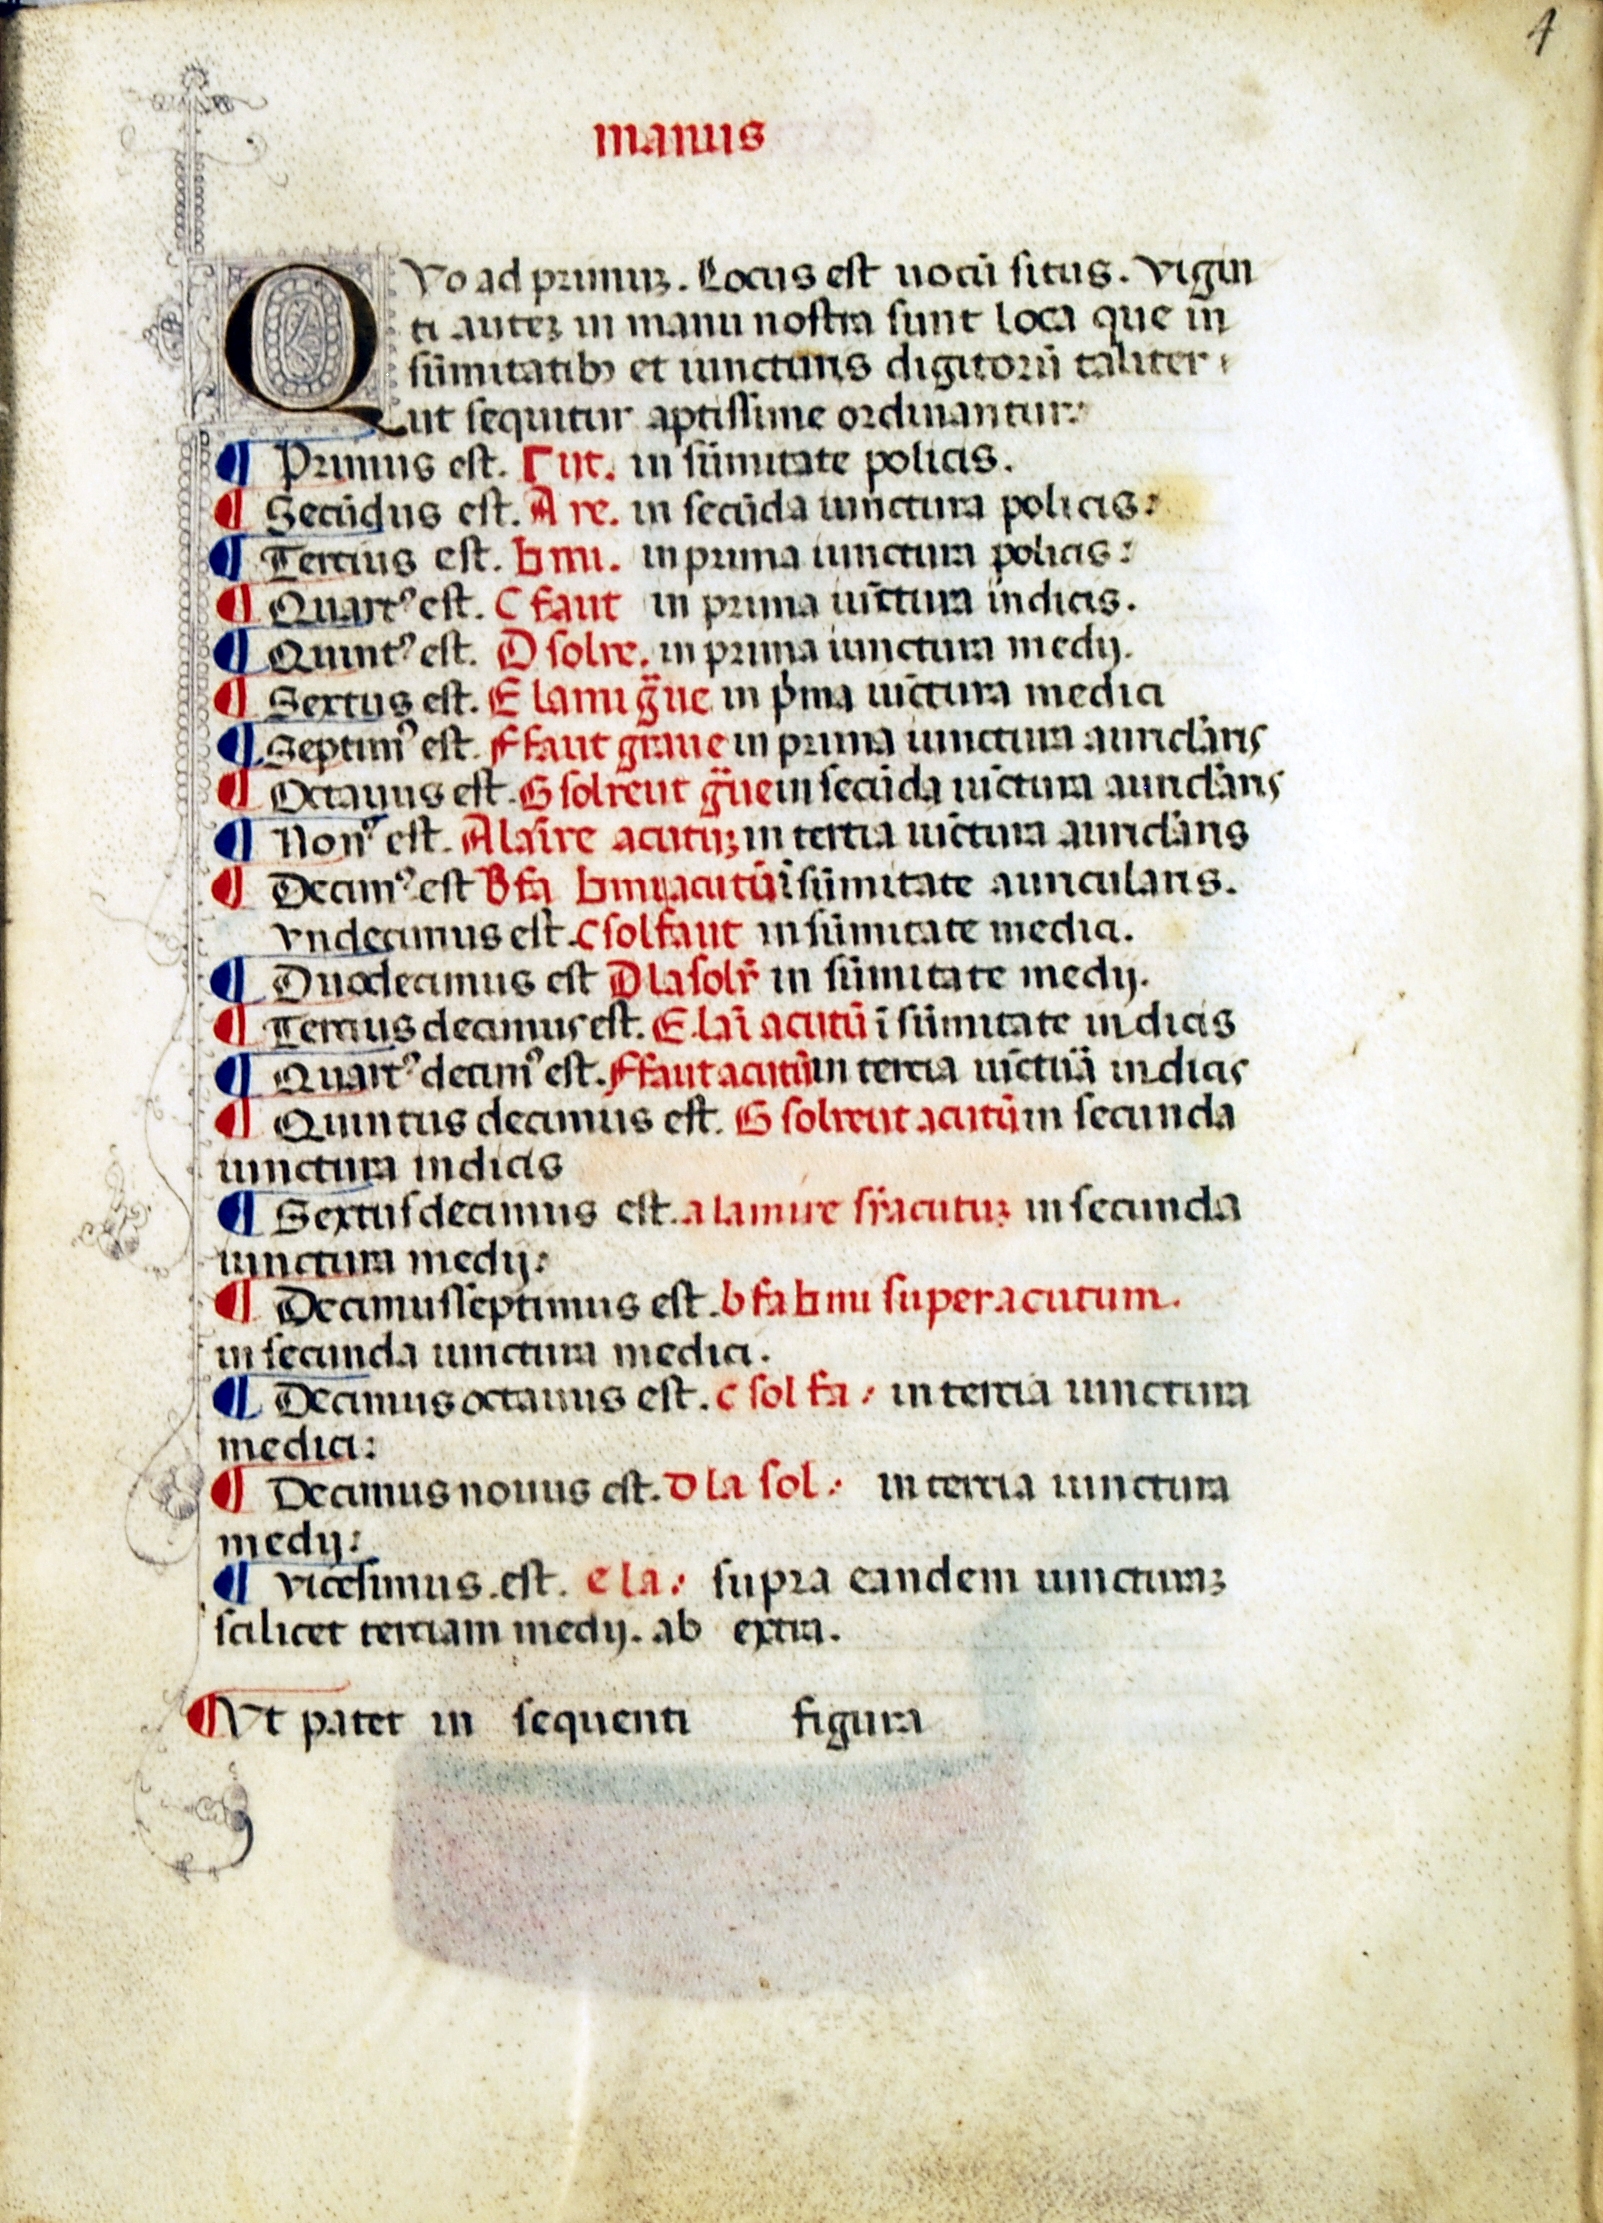 Bologna, Biblioteca Universitaria, MS 2573, fol. 4r. Source: Biblioteca Universitaria, Bologna.